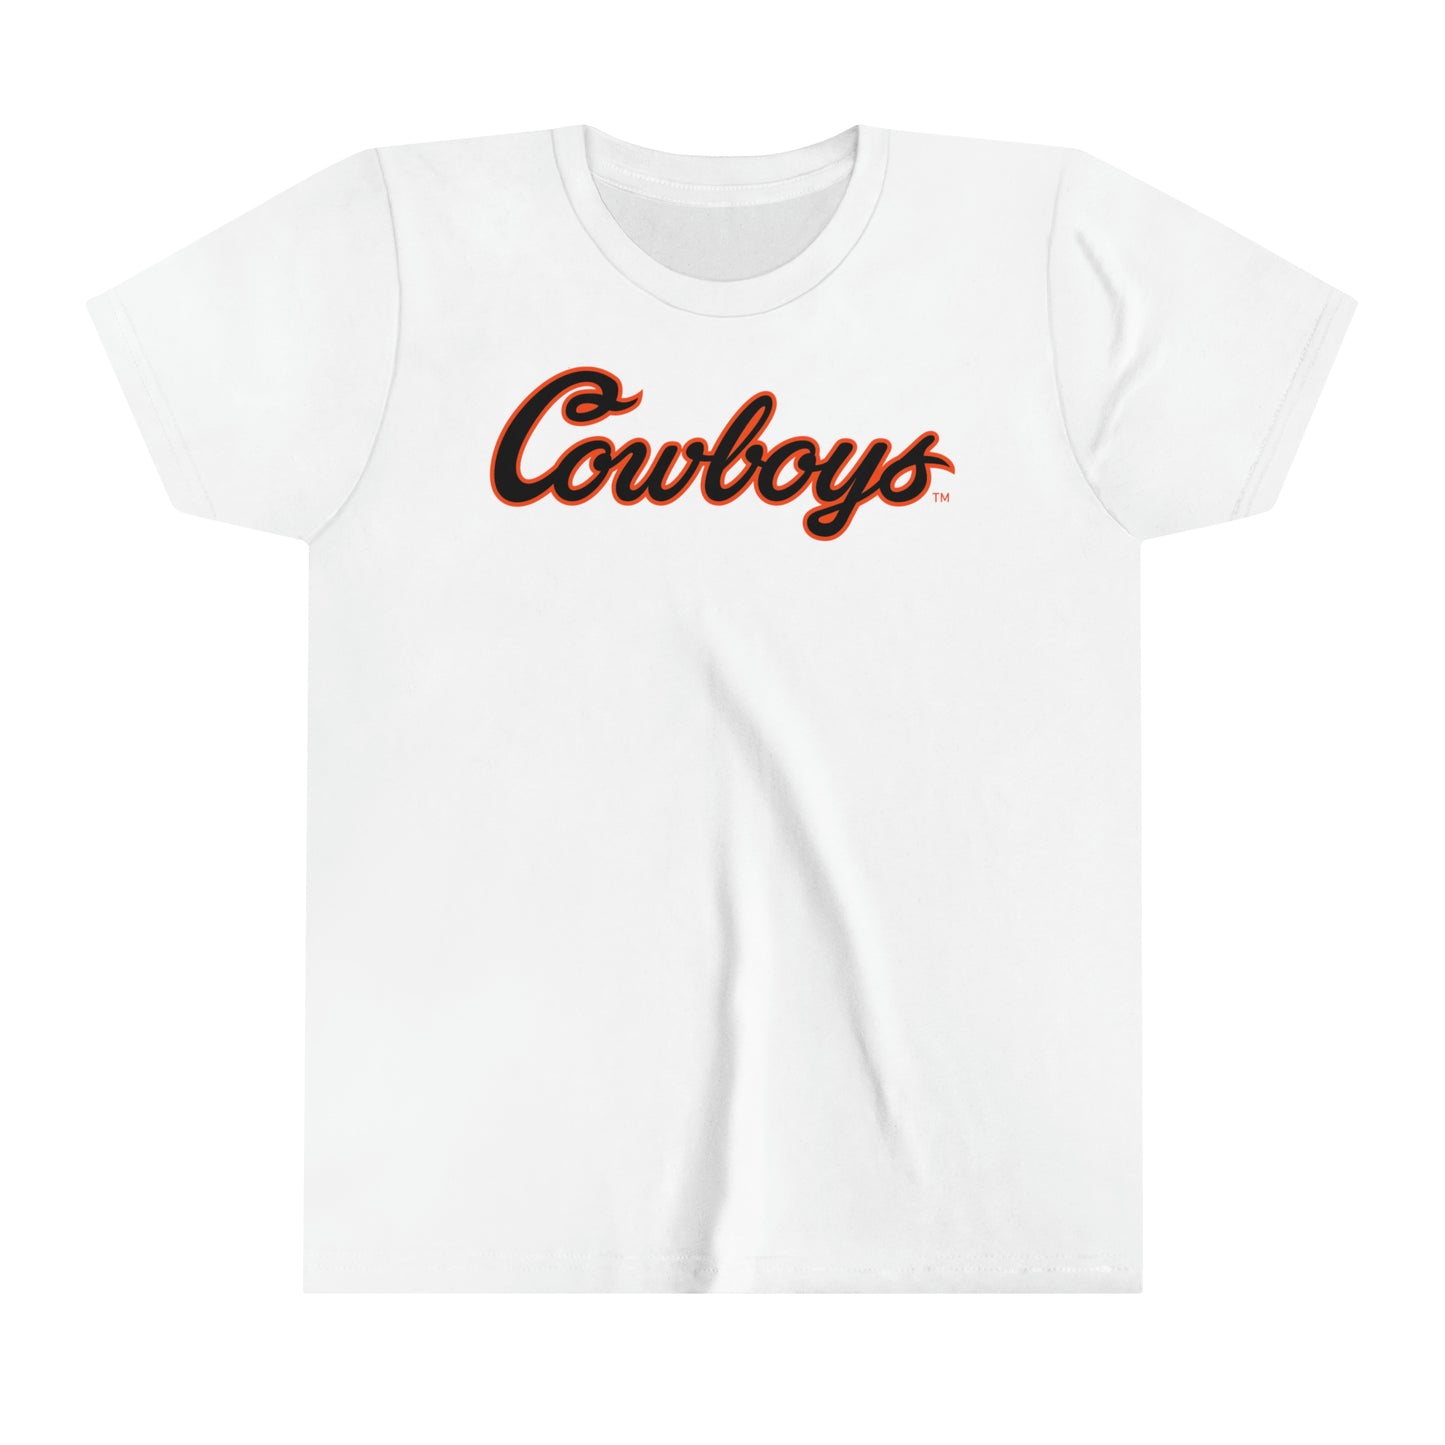 Bryce Thompson #1 Cursive Cowboys Youth T-Shirt